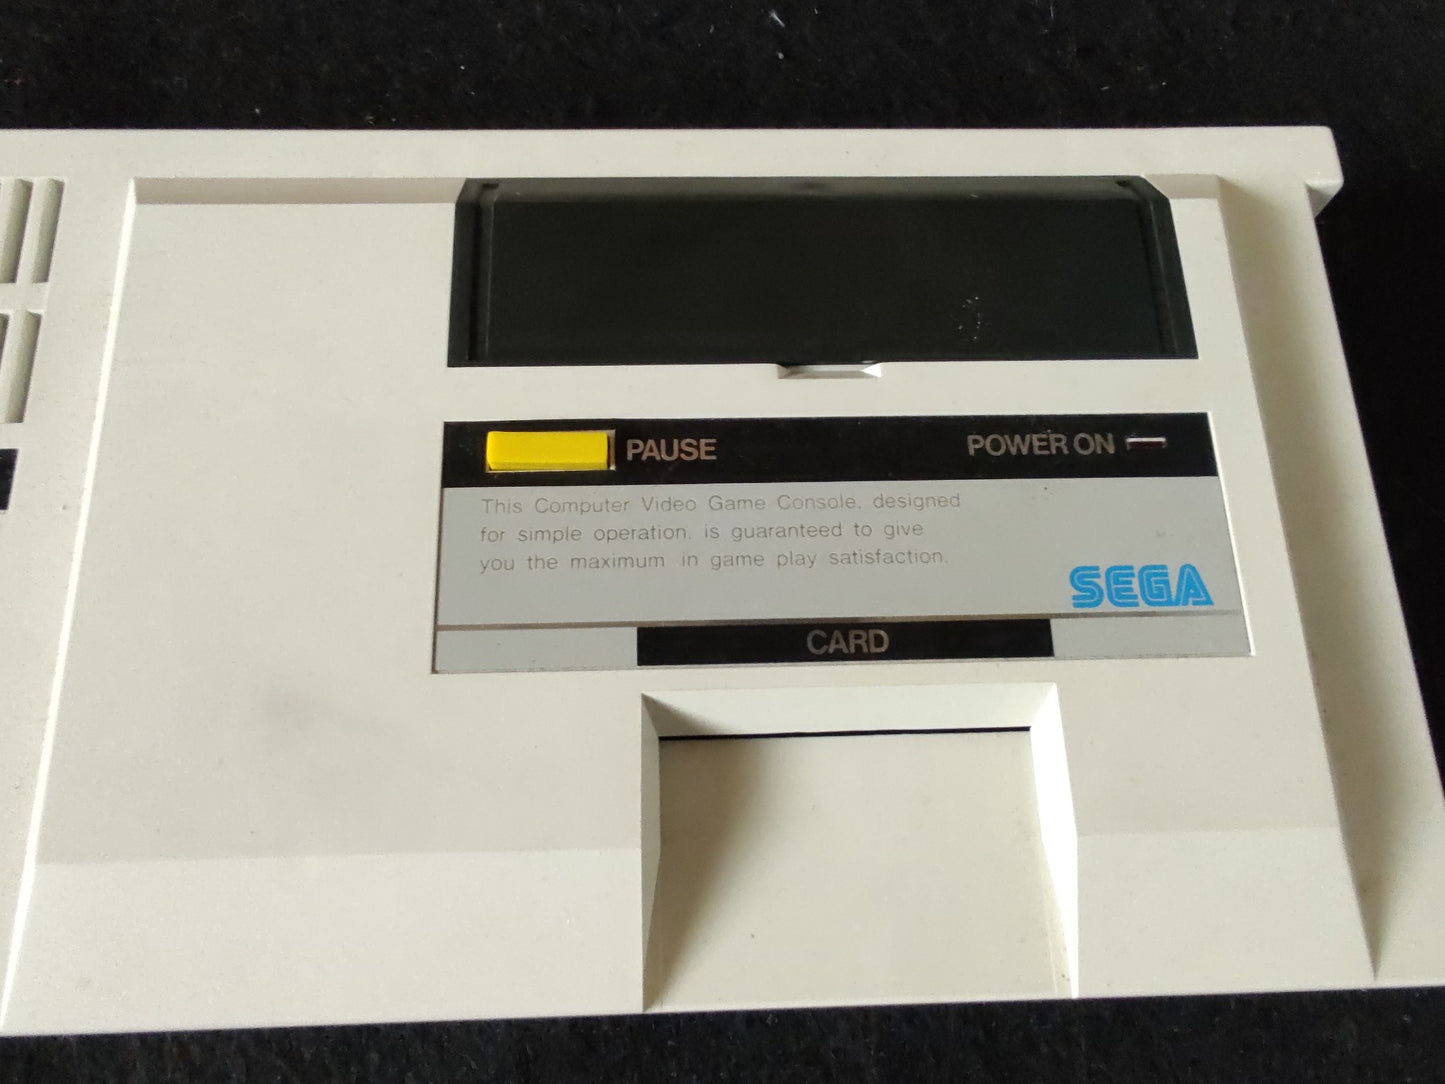 SEGA MARK 3 III CONSOLE (Sega Master System) ,w/Pads AV cable, Working-f0826-2